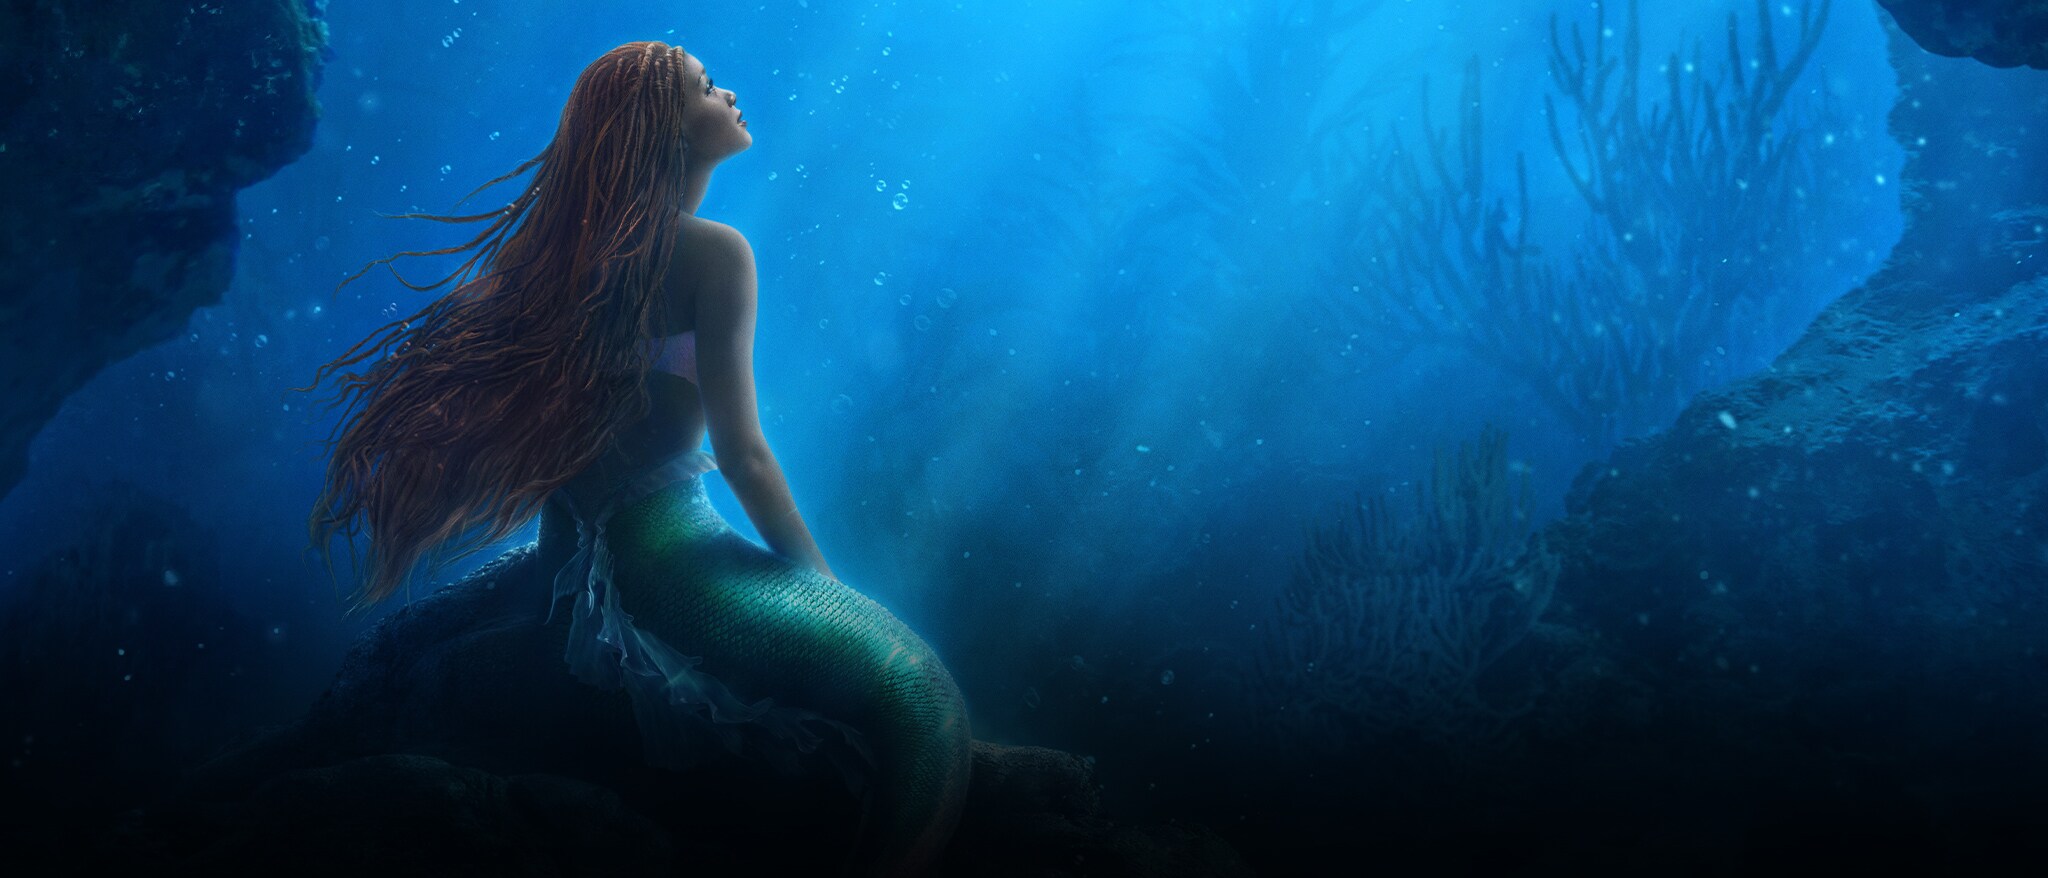 The Little Mermaid | Stream it on Disney+